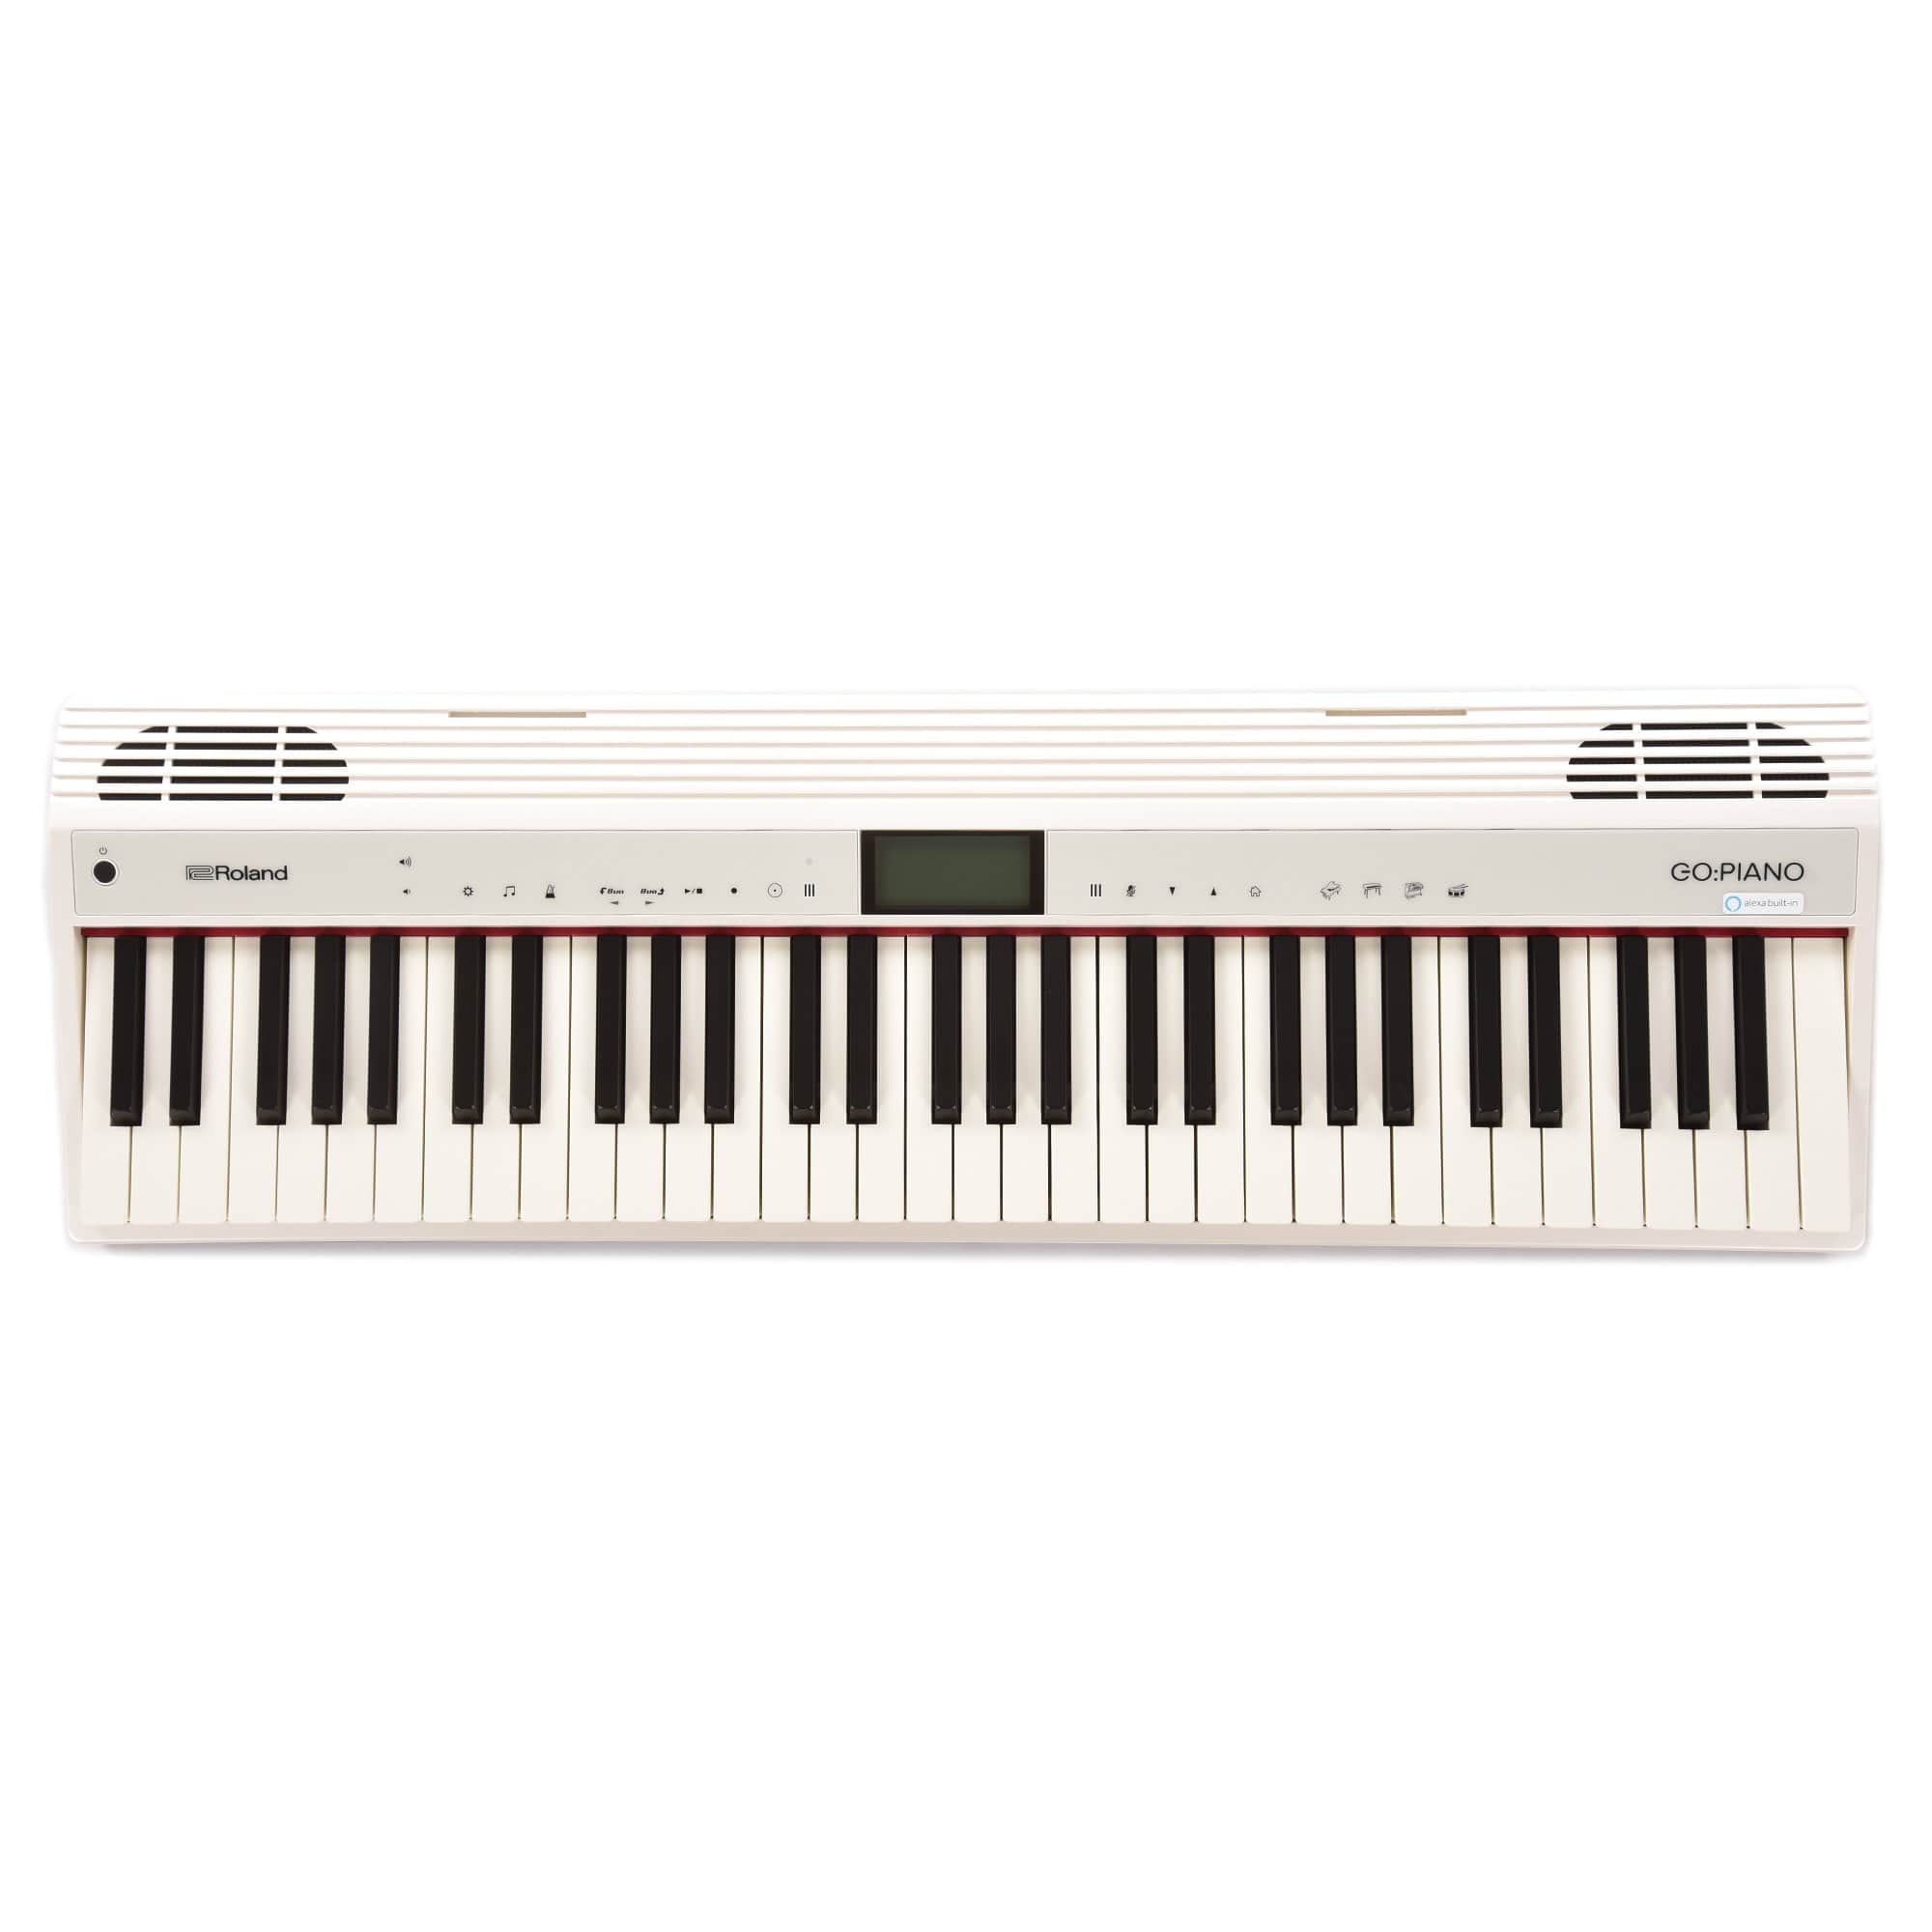 Exchange　Piano　Chicago　61-Key　GO-61P-A　Roland　Music　Digital　–